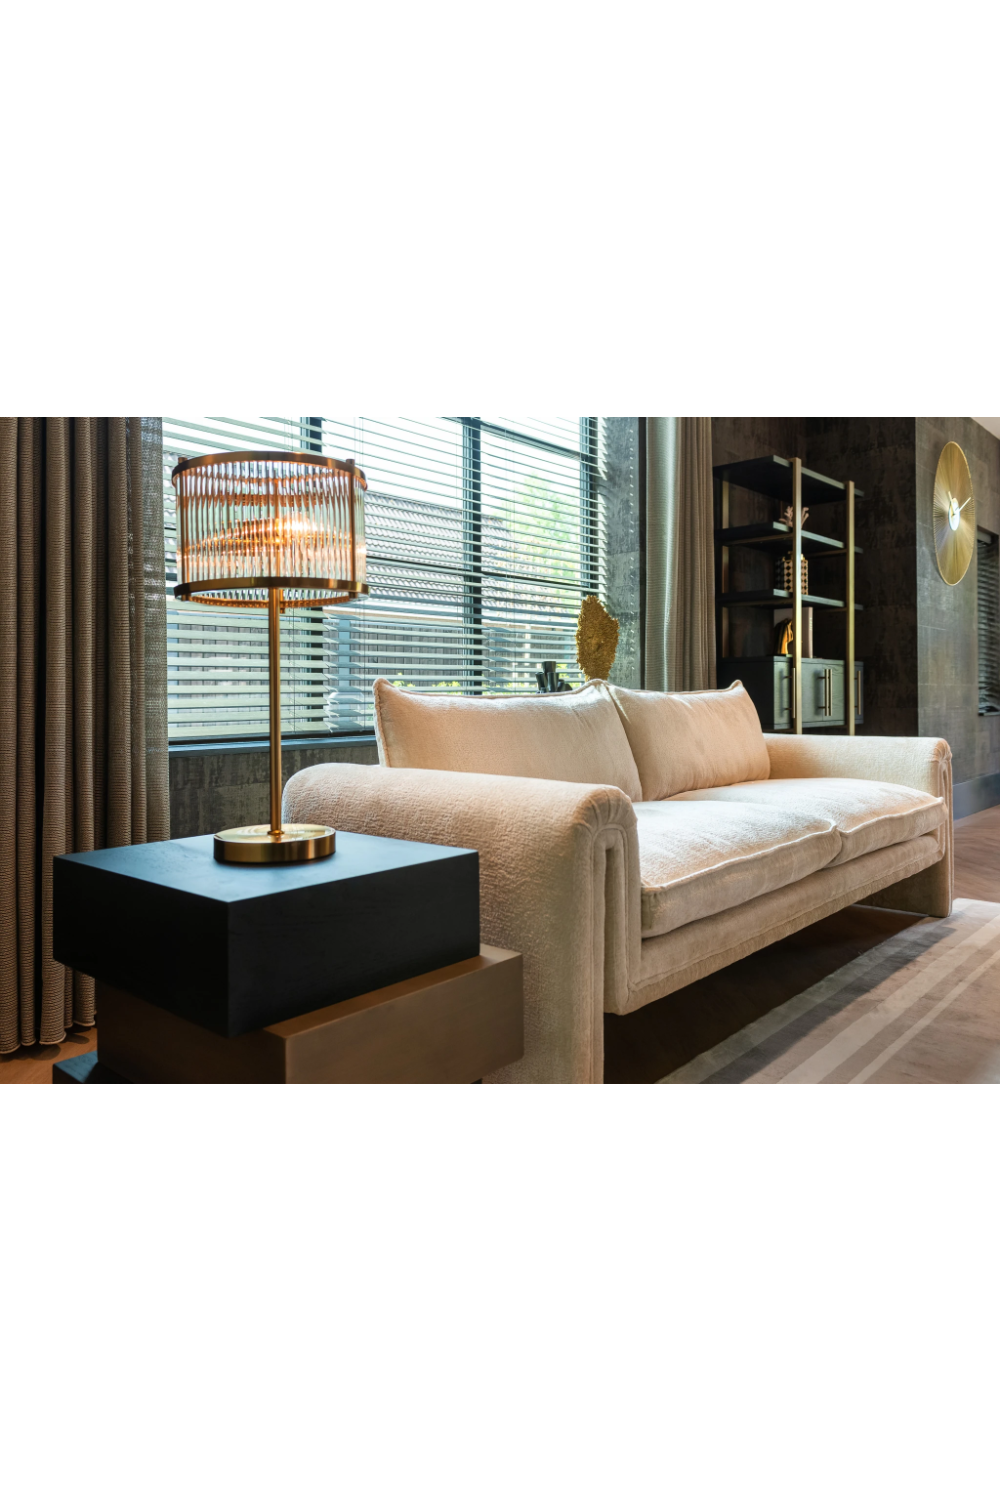 White Chenille Modern Sofa | OROA Sandro | Oroa.com